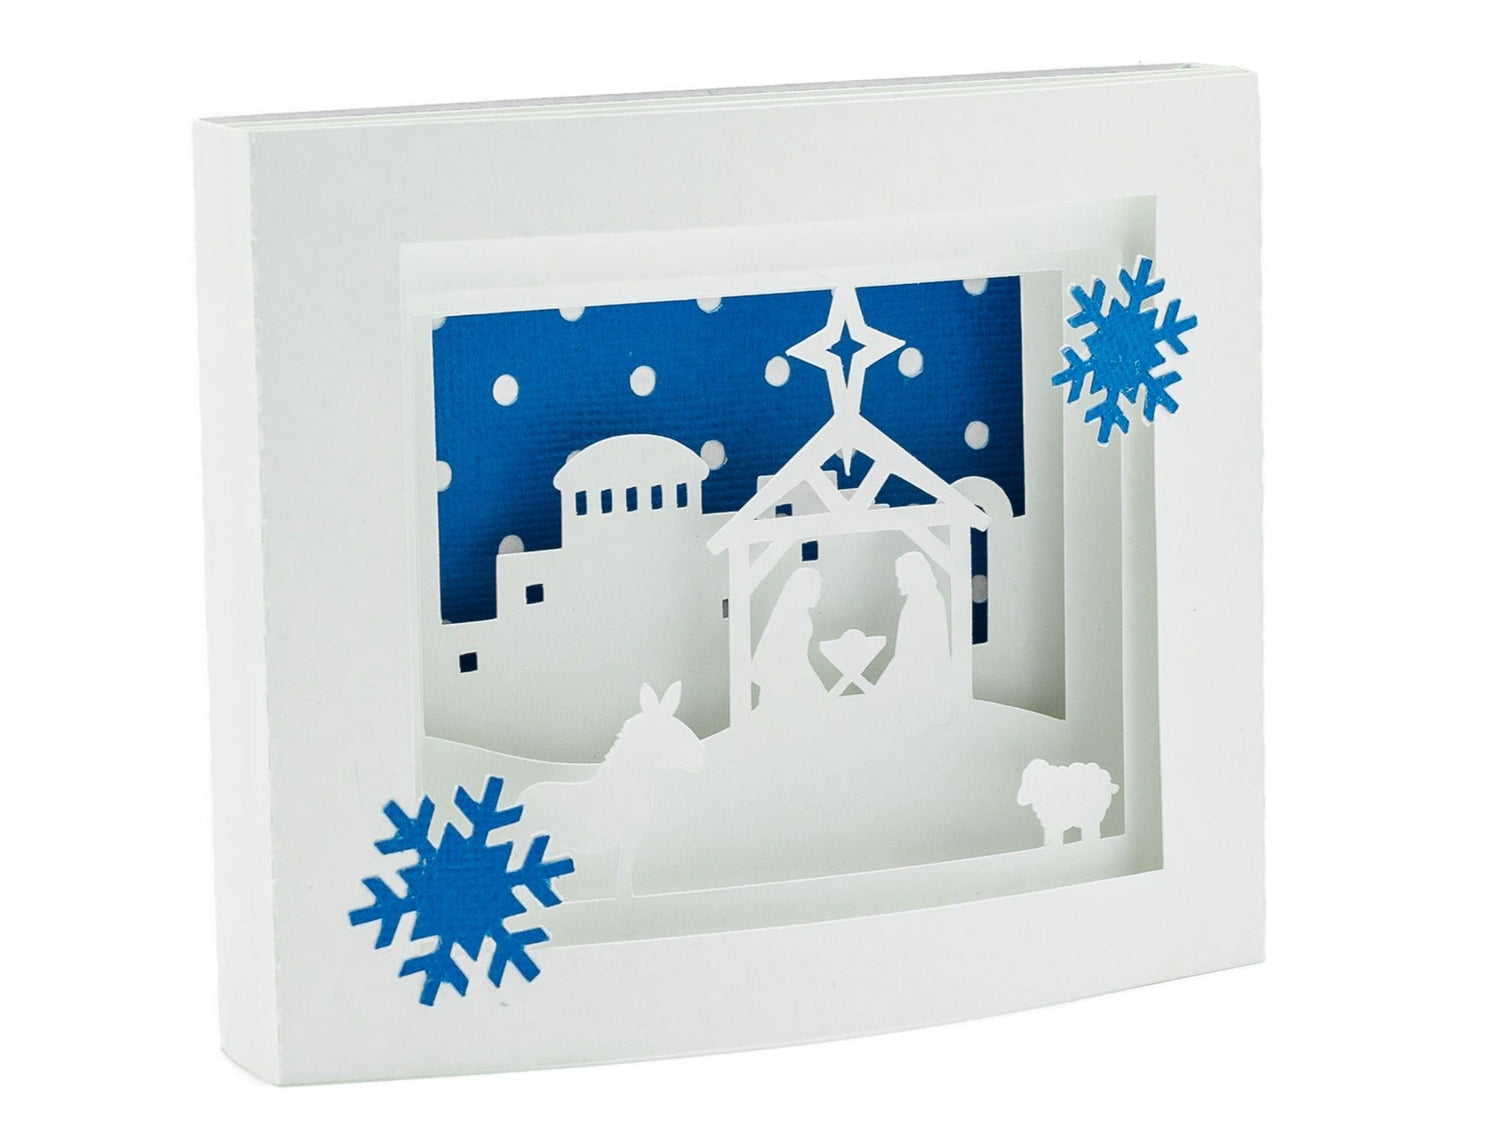 Bulk Set of 12 Nativity Silent Night Over Jerusalem Christmas Shadow Box Pop Up 3D Greeting Card